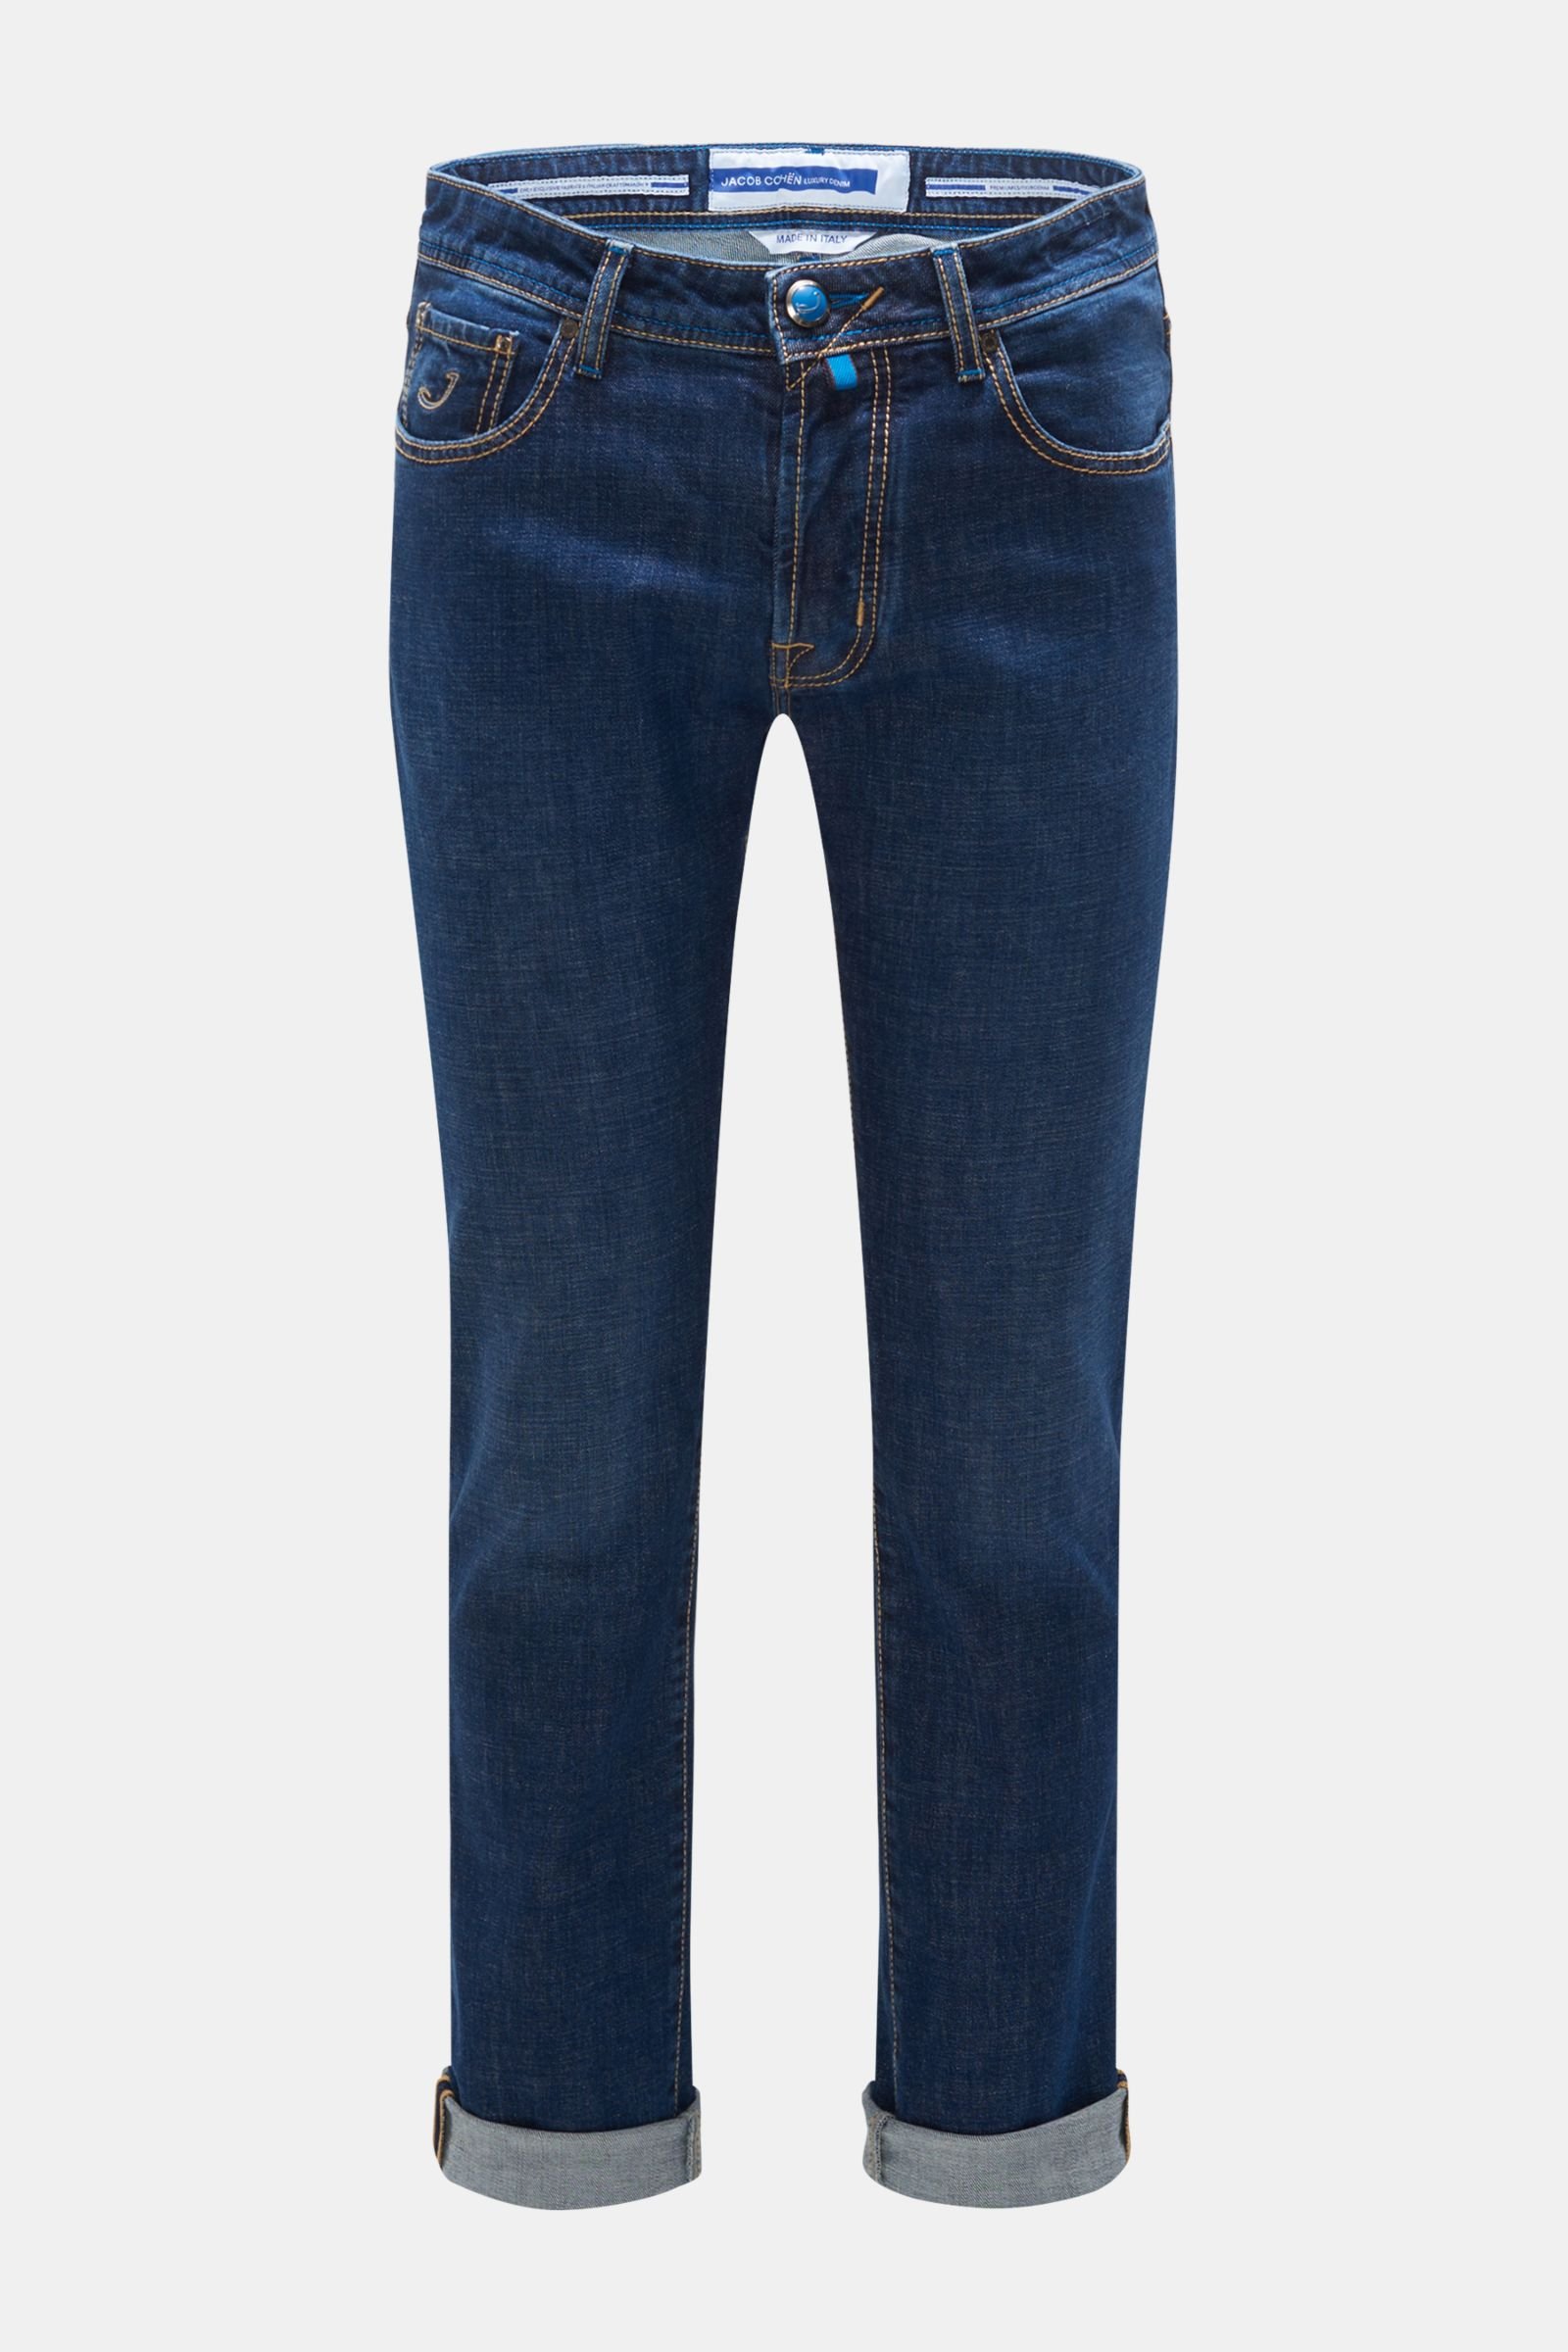 'Bard' jeans navy (previously J688)